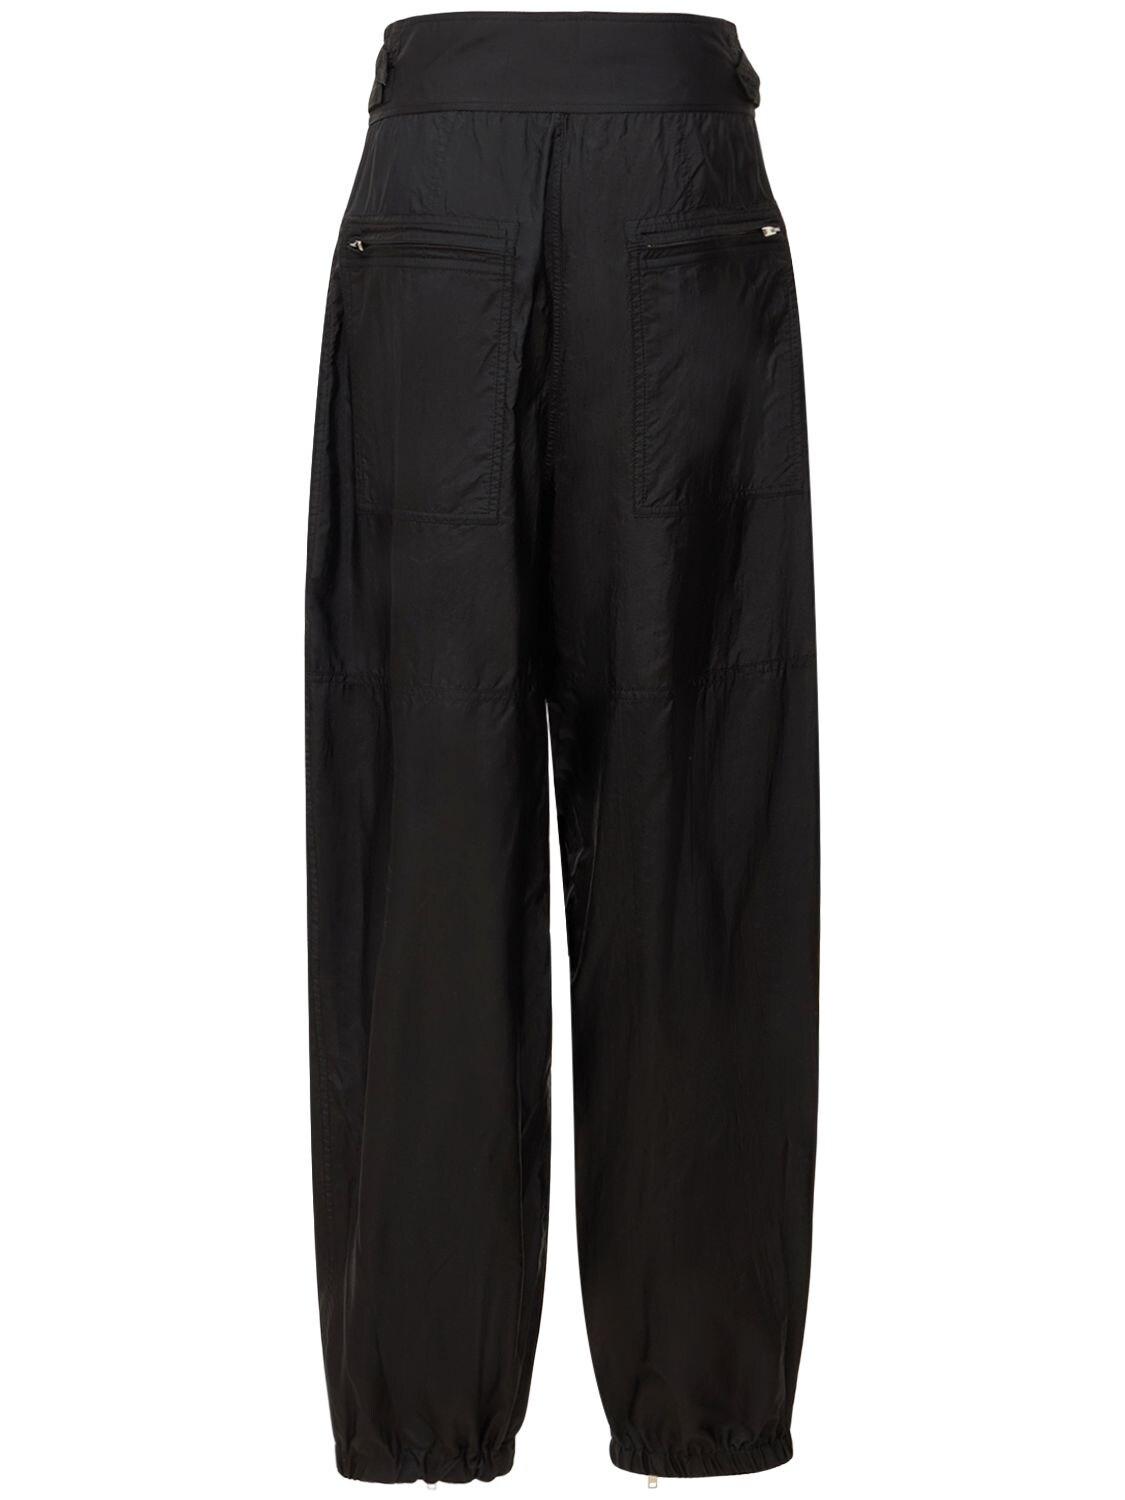 Isabel Marant Olga Sporty Silk Blend Pants in Black | Lyst Canada